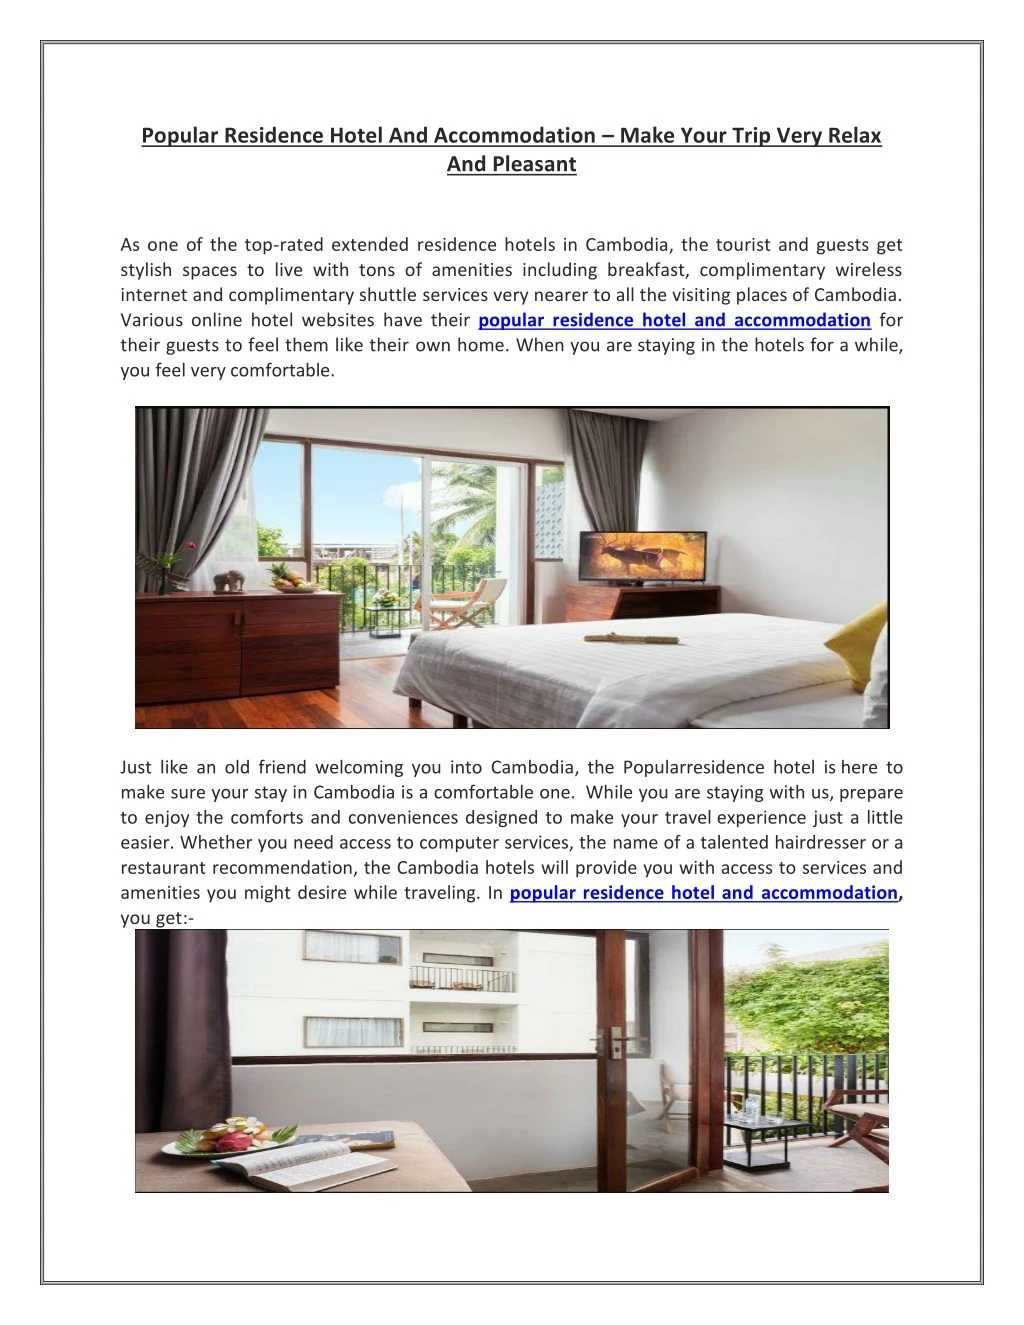 popular residence hotel and accommodation make